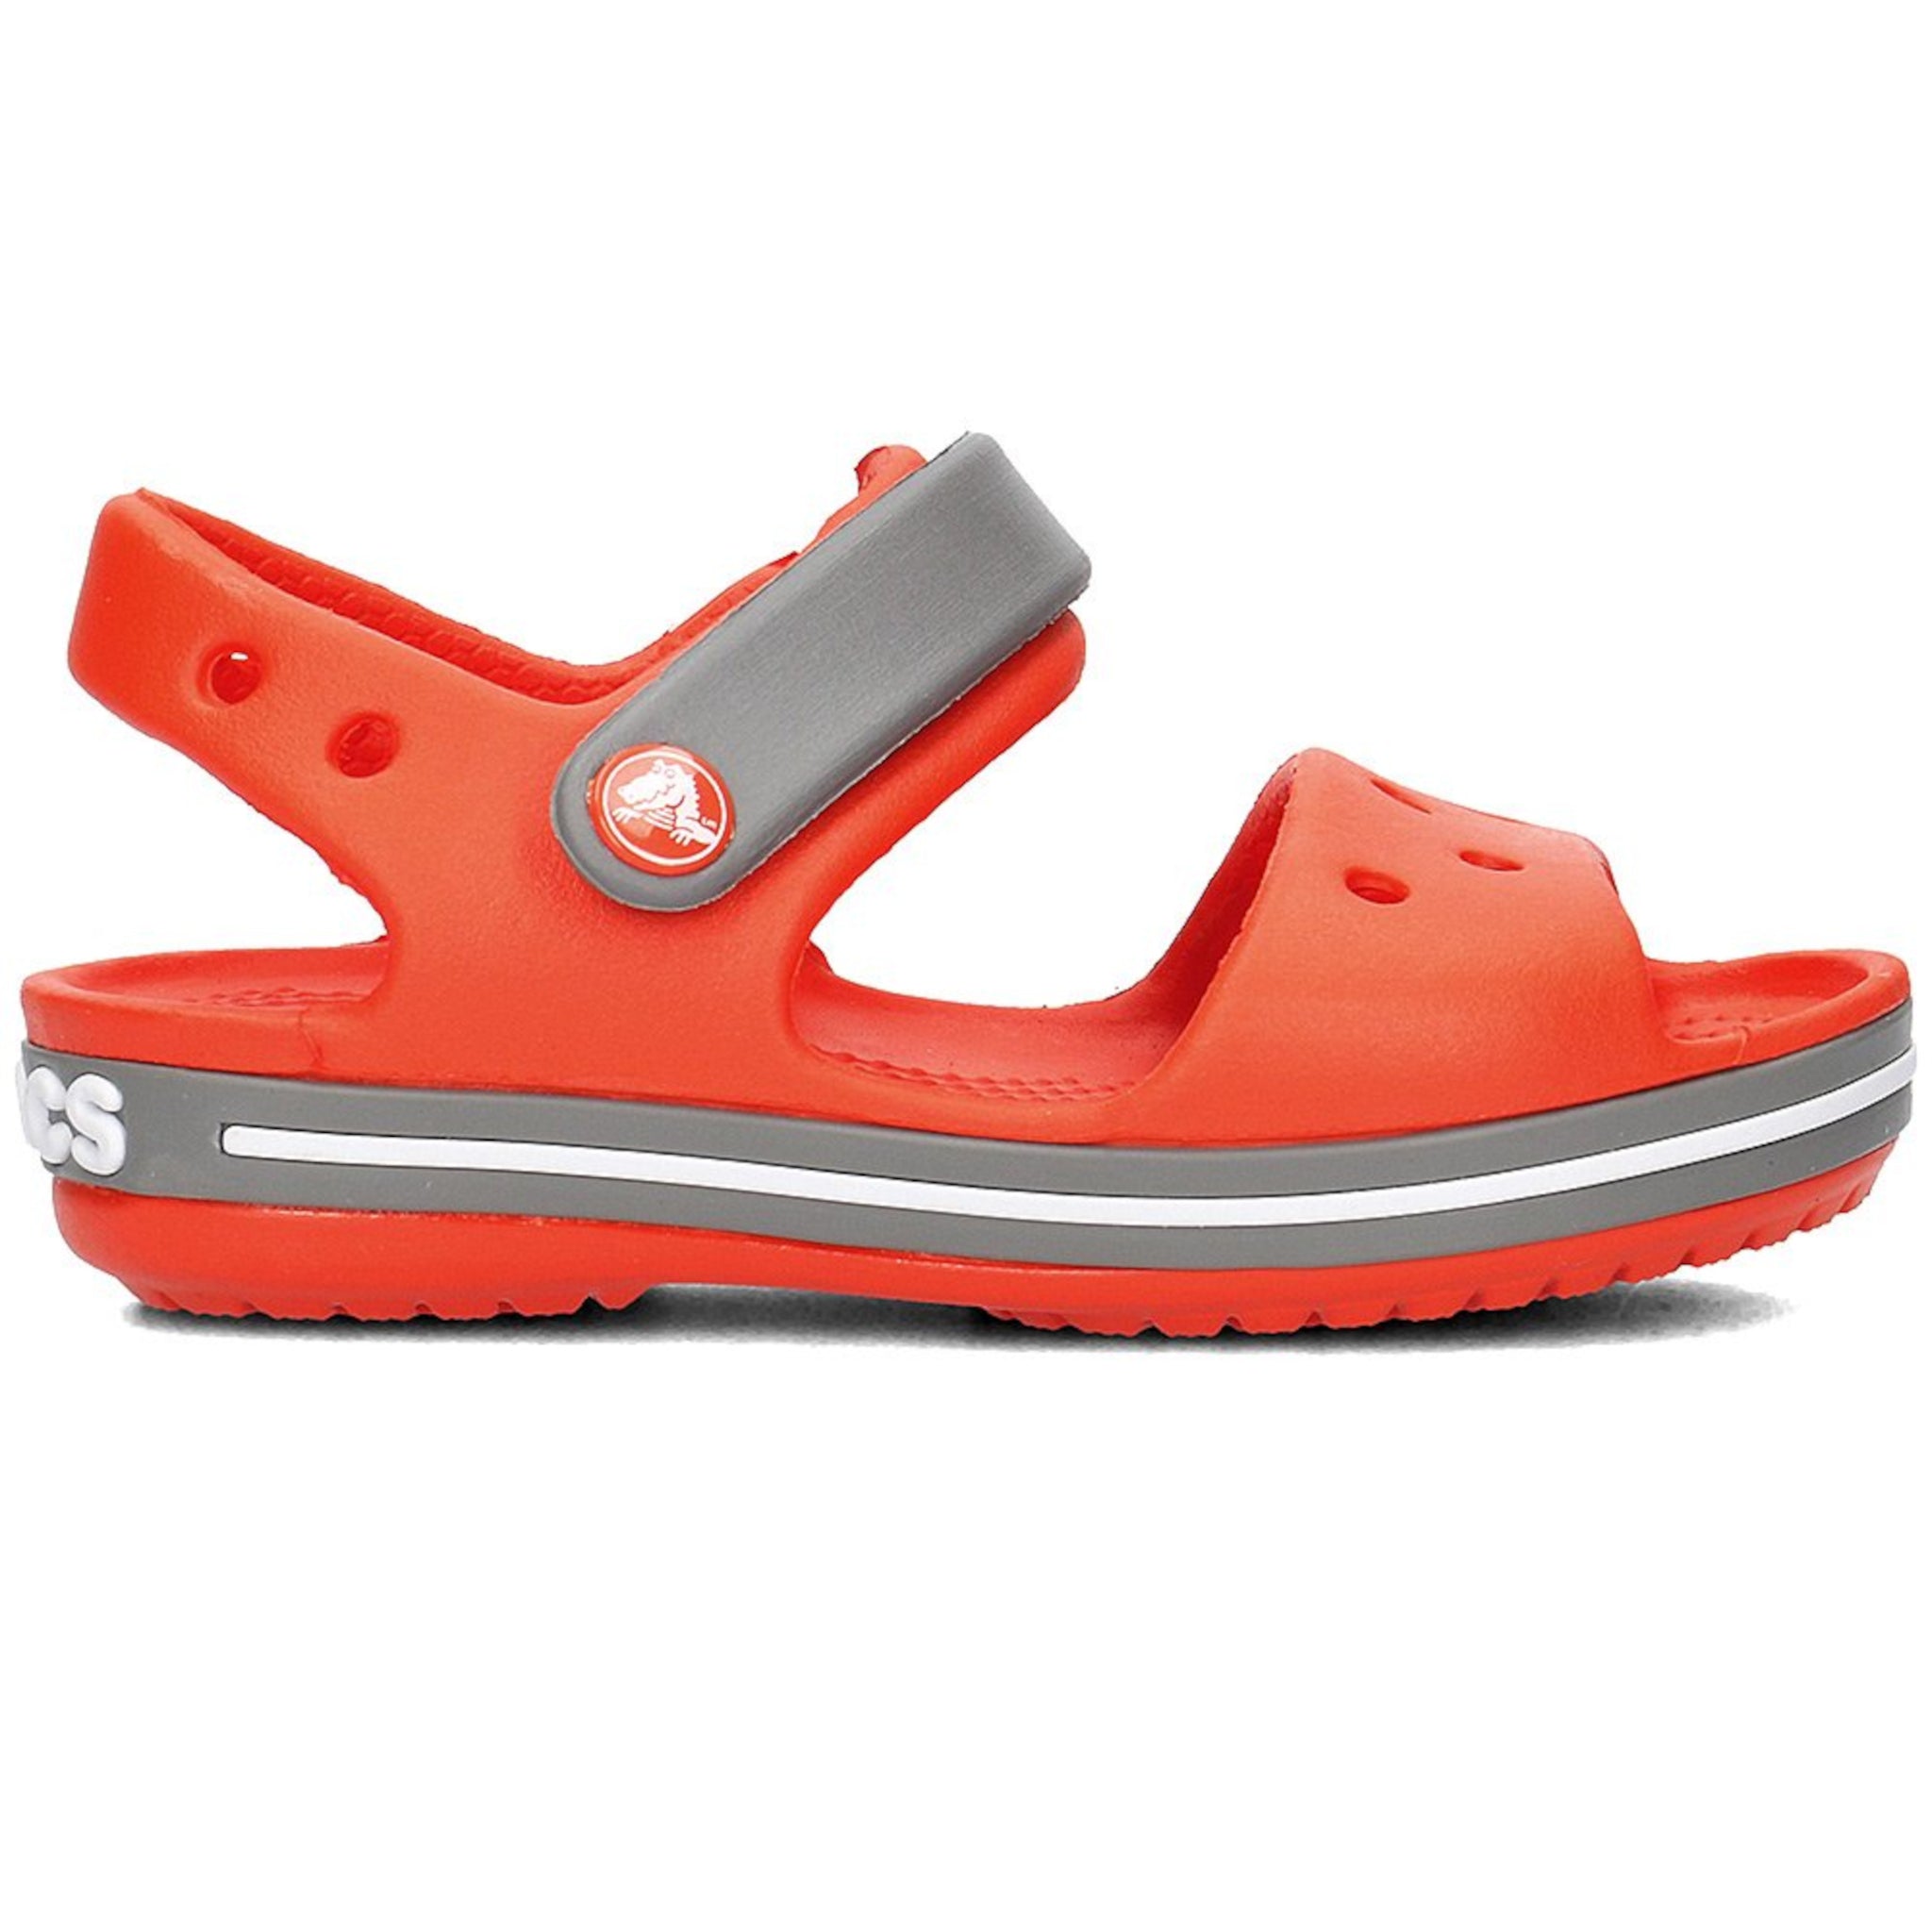 SALE - Crocs KIDS Crocband Sandal - Tangerine/ Smoke - 12856-818